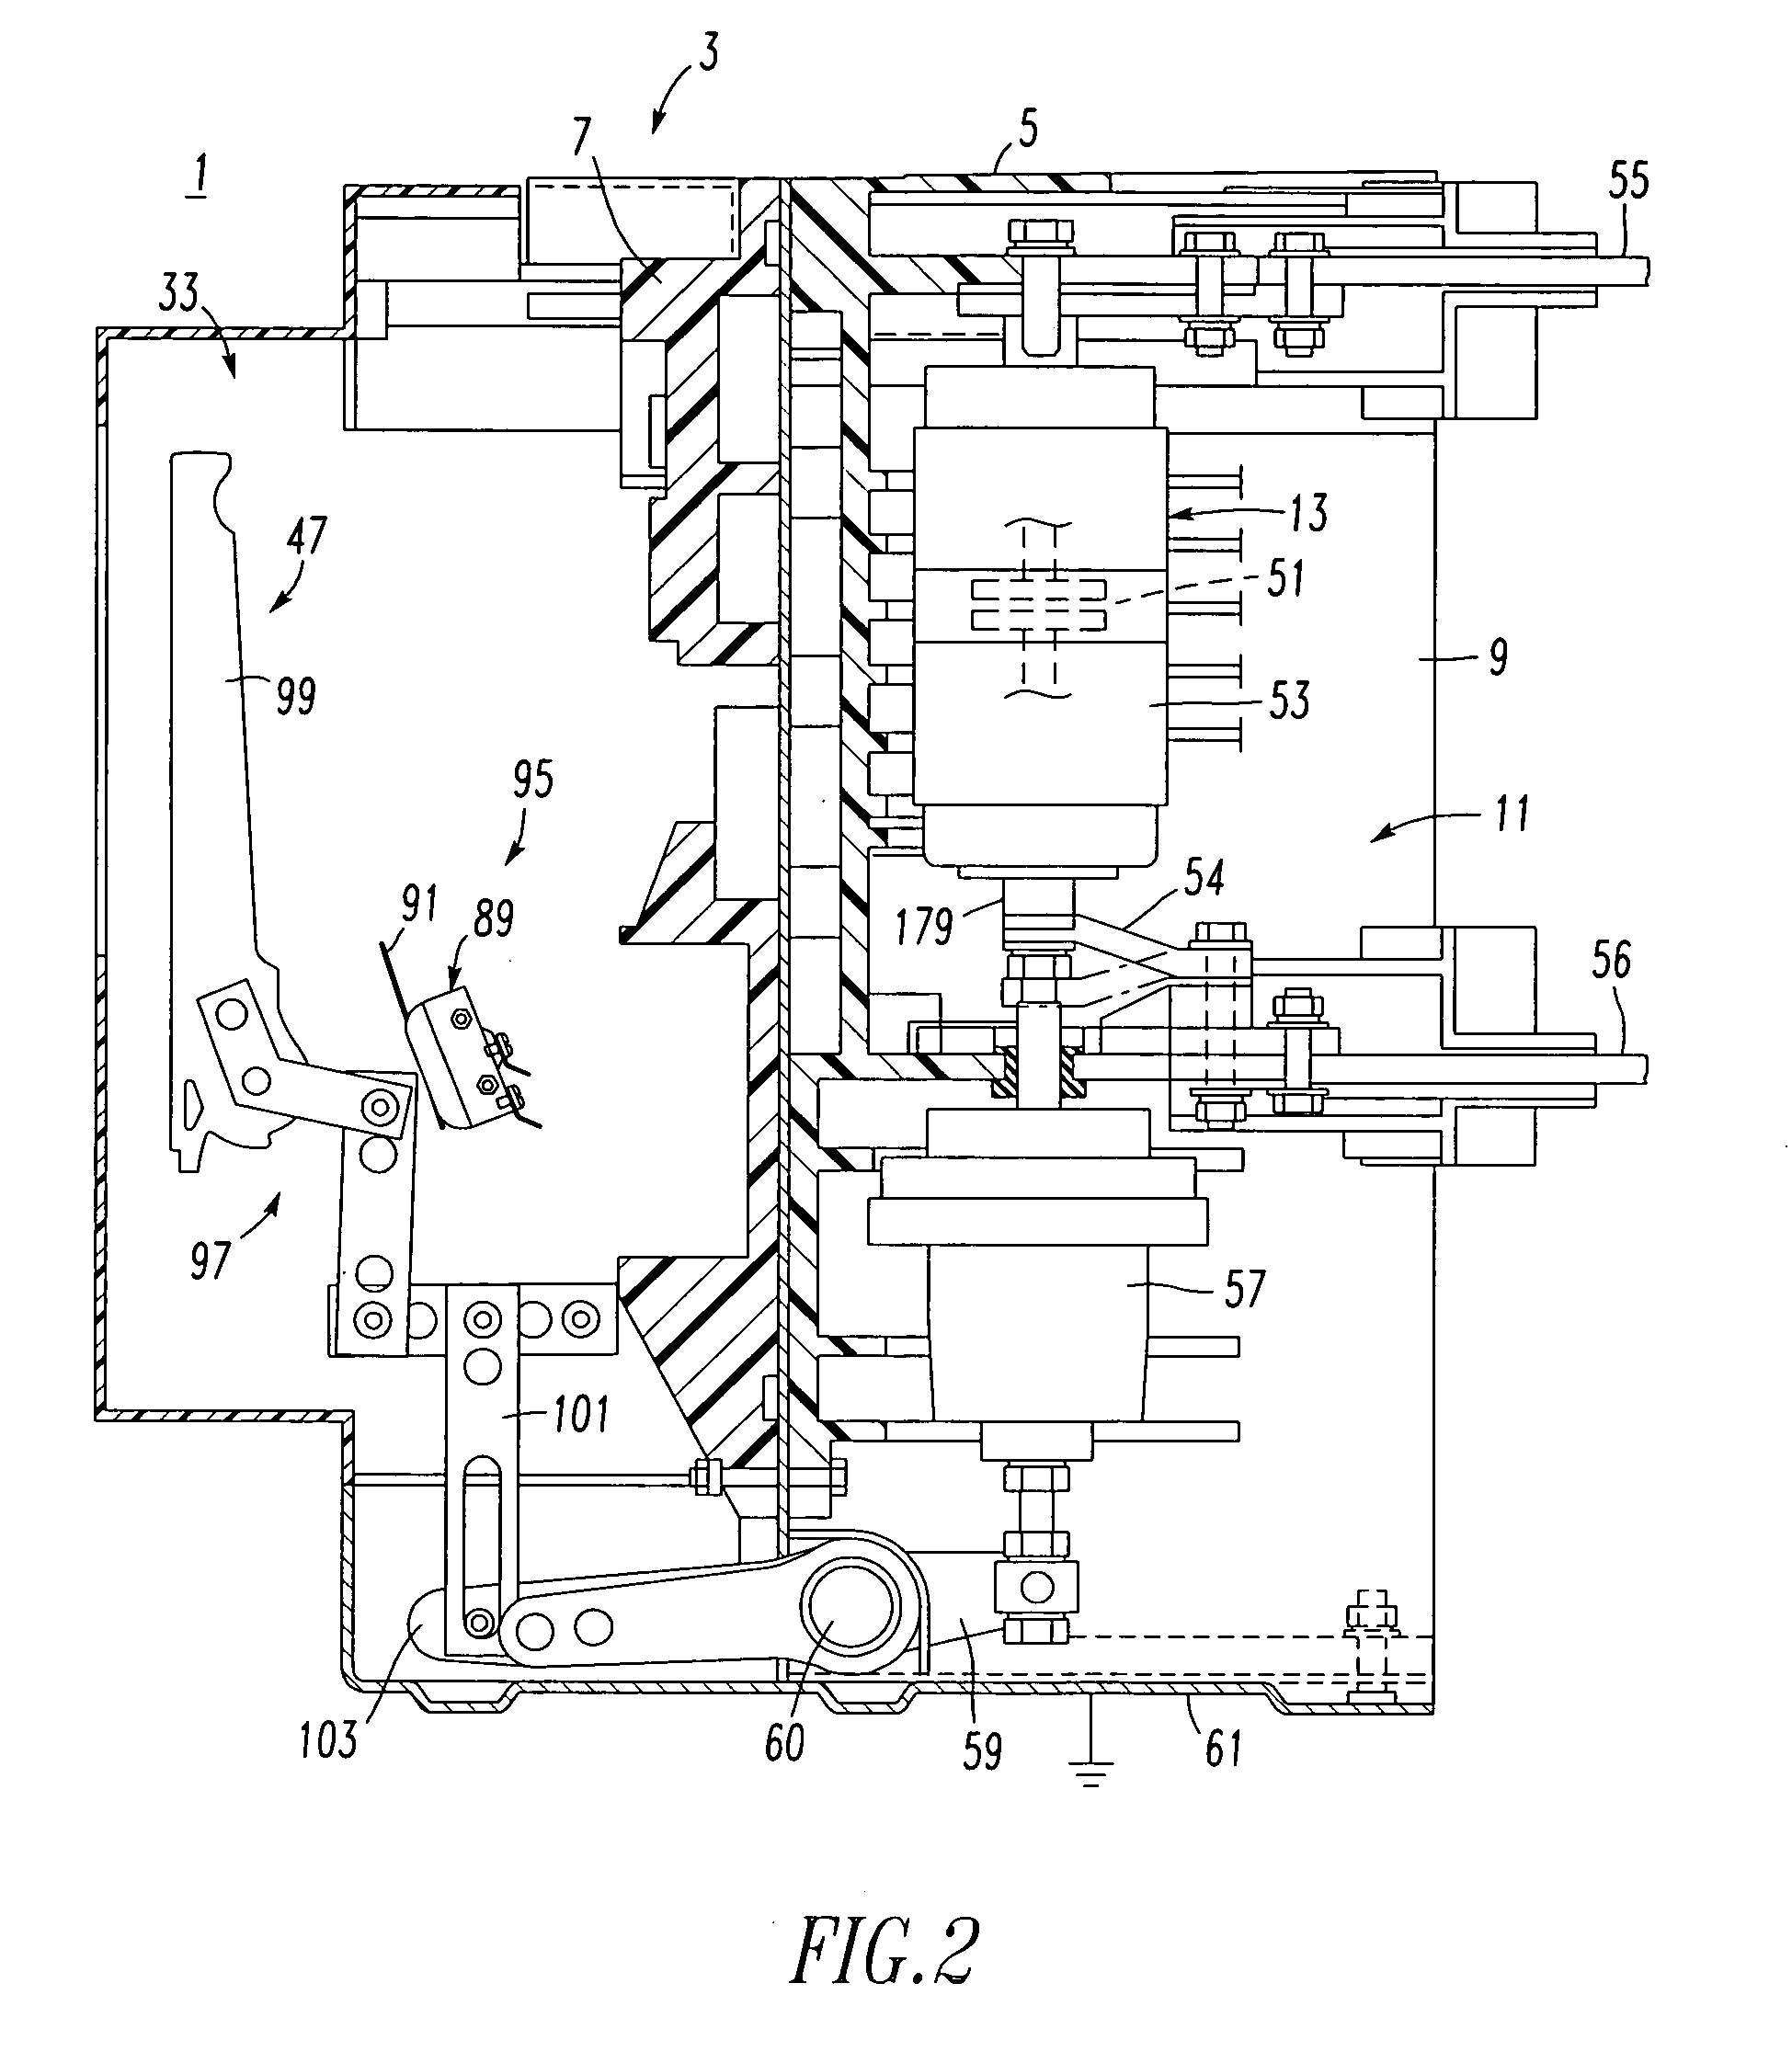 Circuit interrupter including linear actuator and manual pivot member